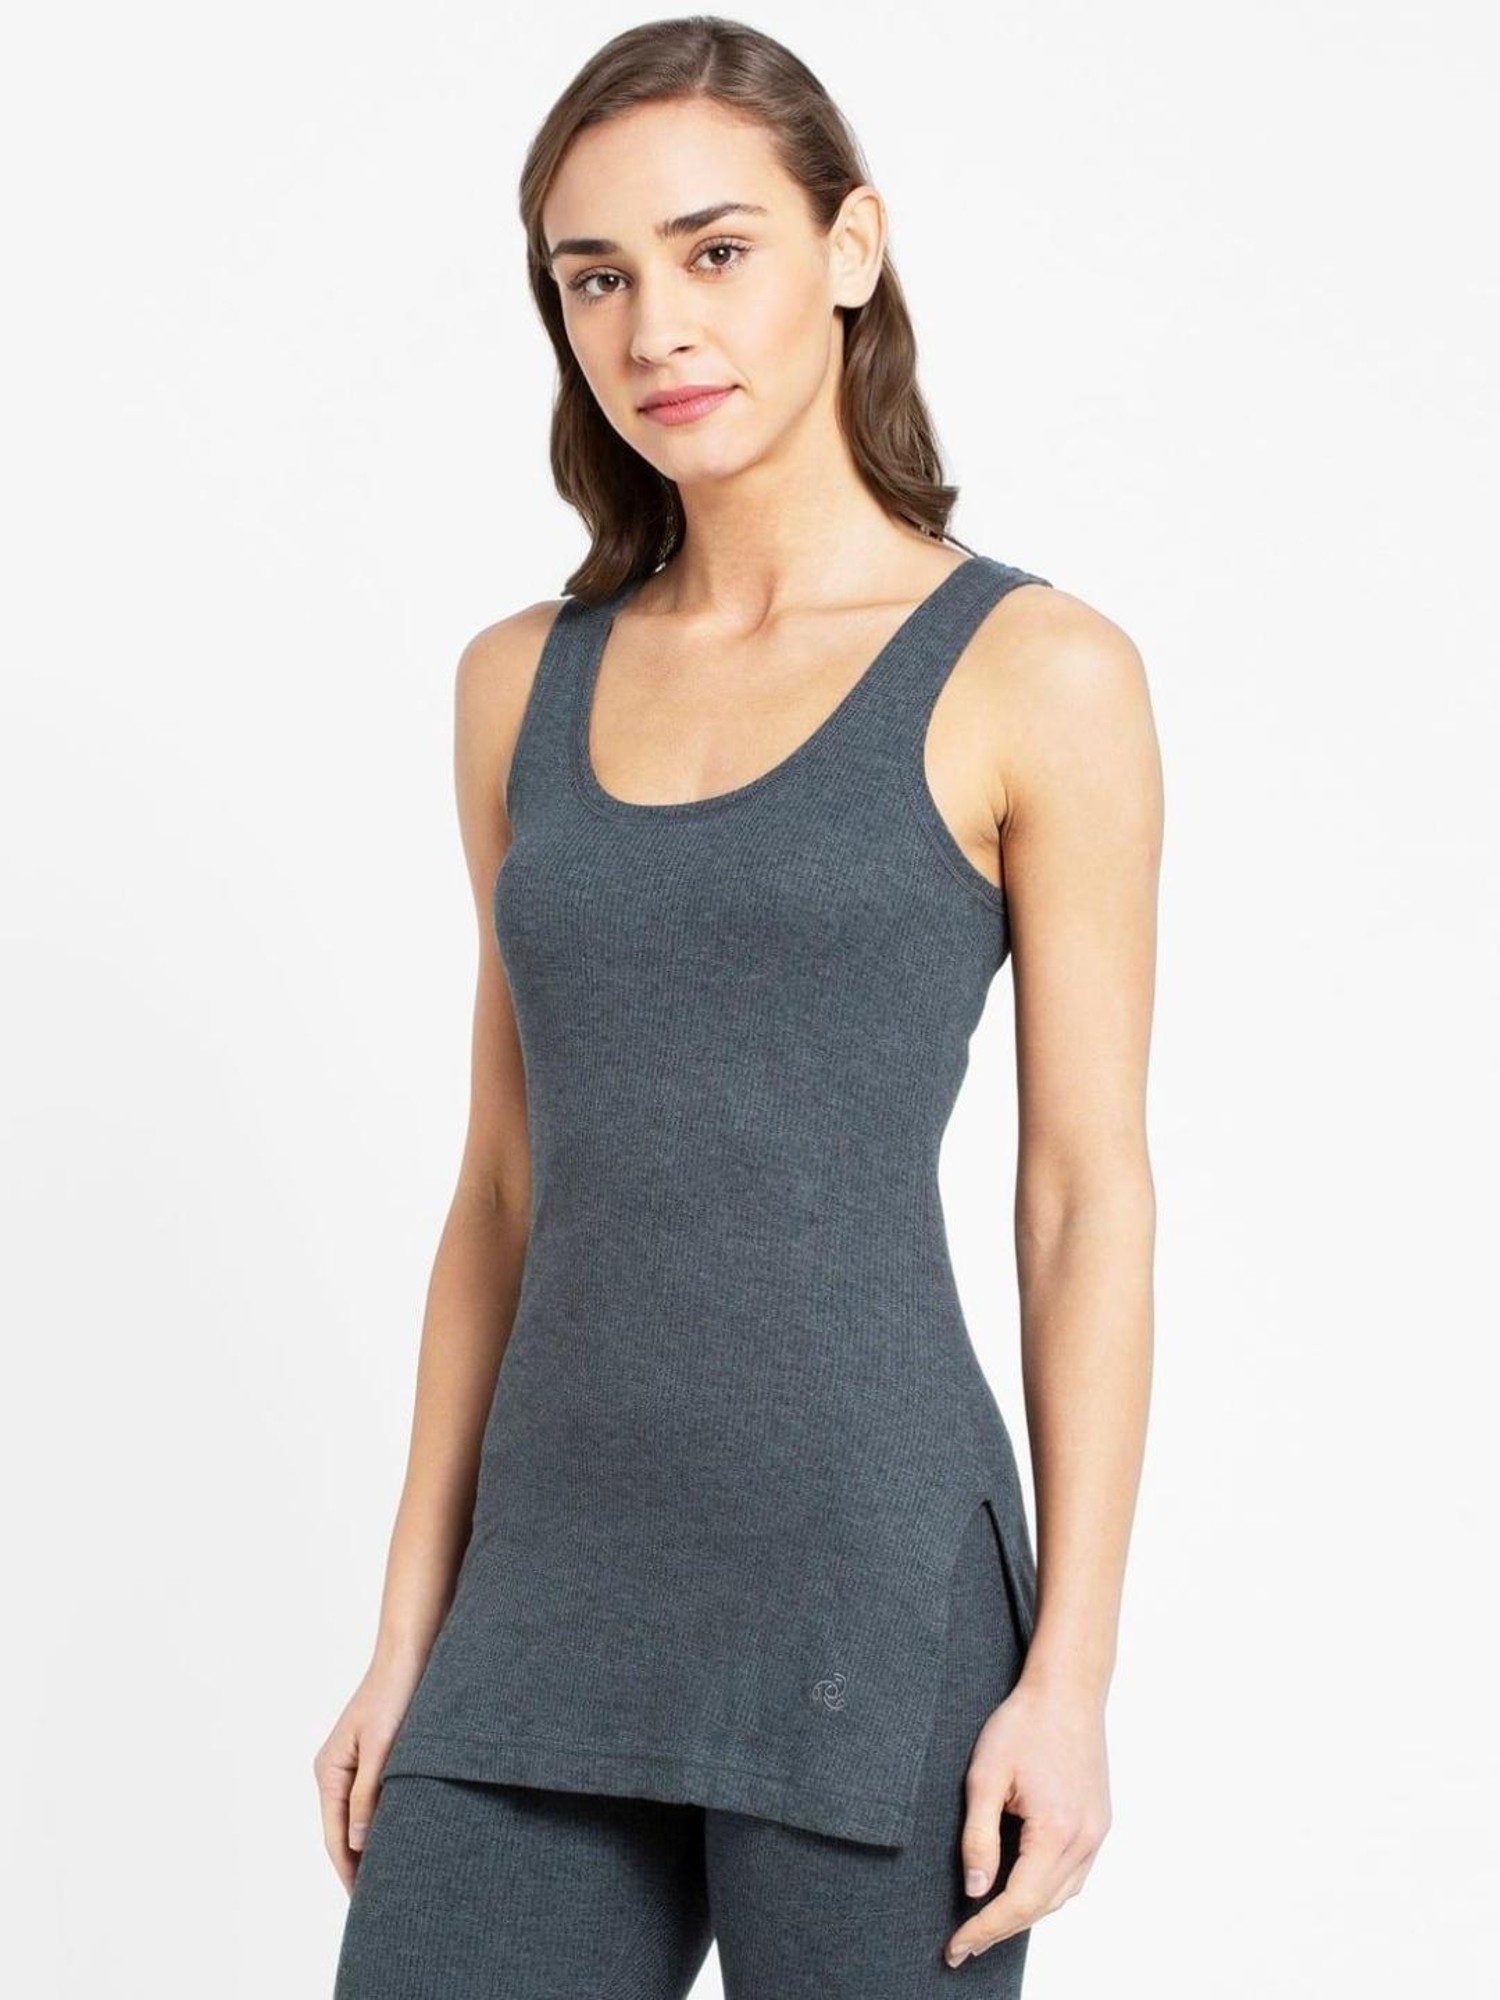 Buy Jockey Charcoal Grey Camisole for Women Online @ Tata CLiQ